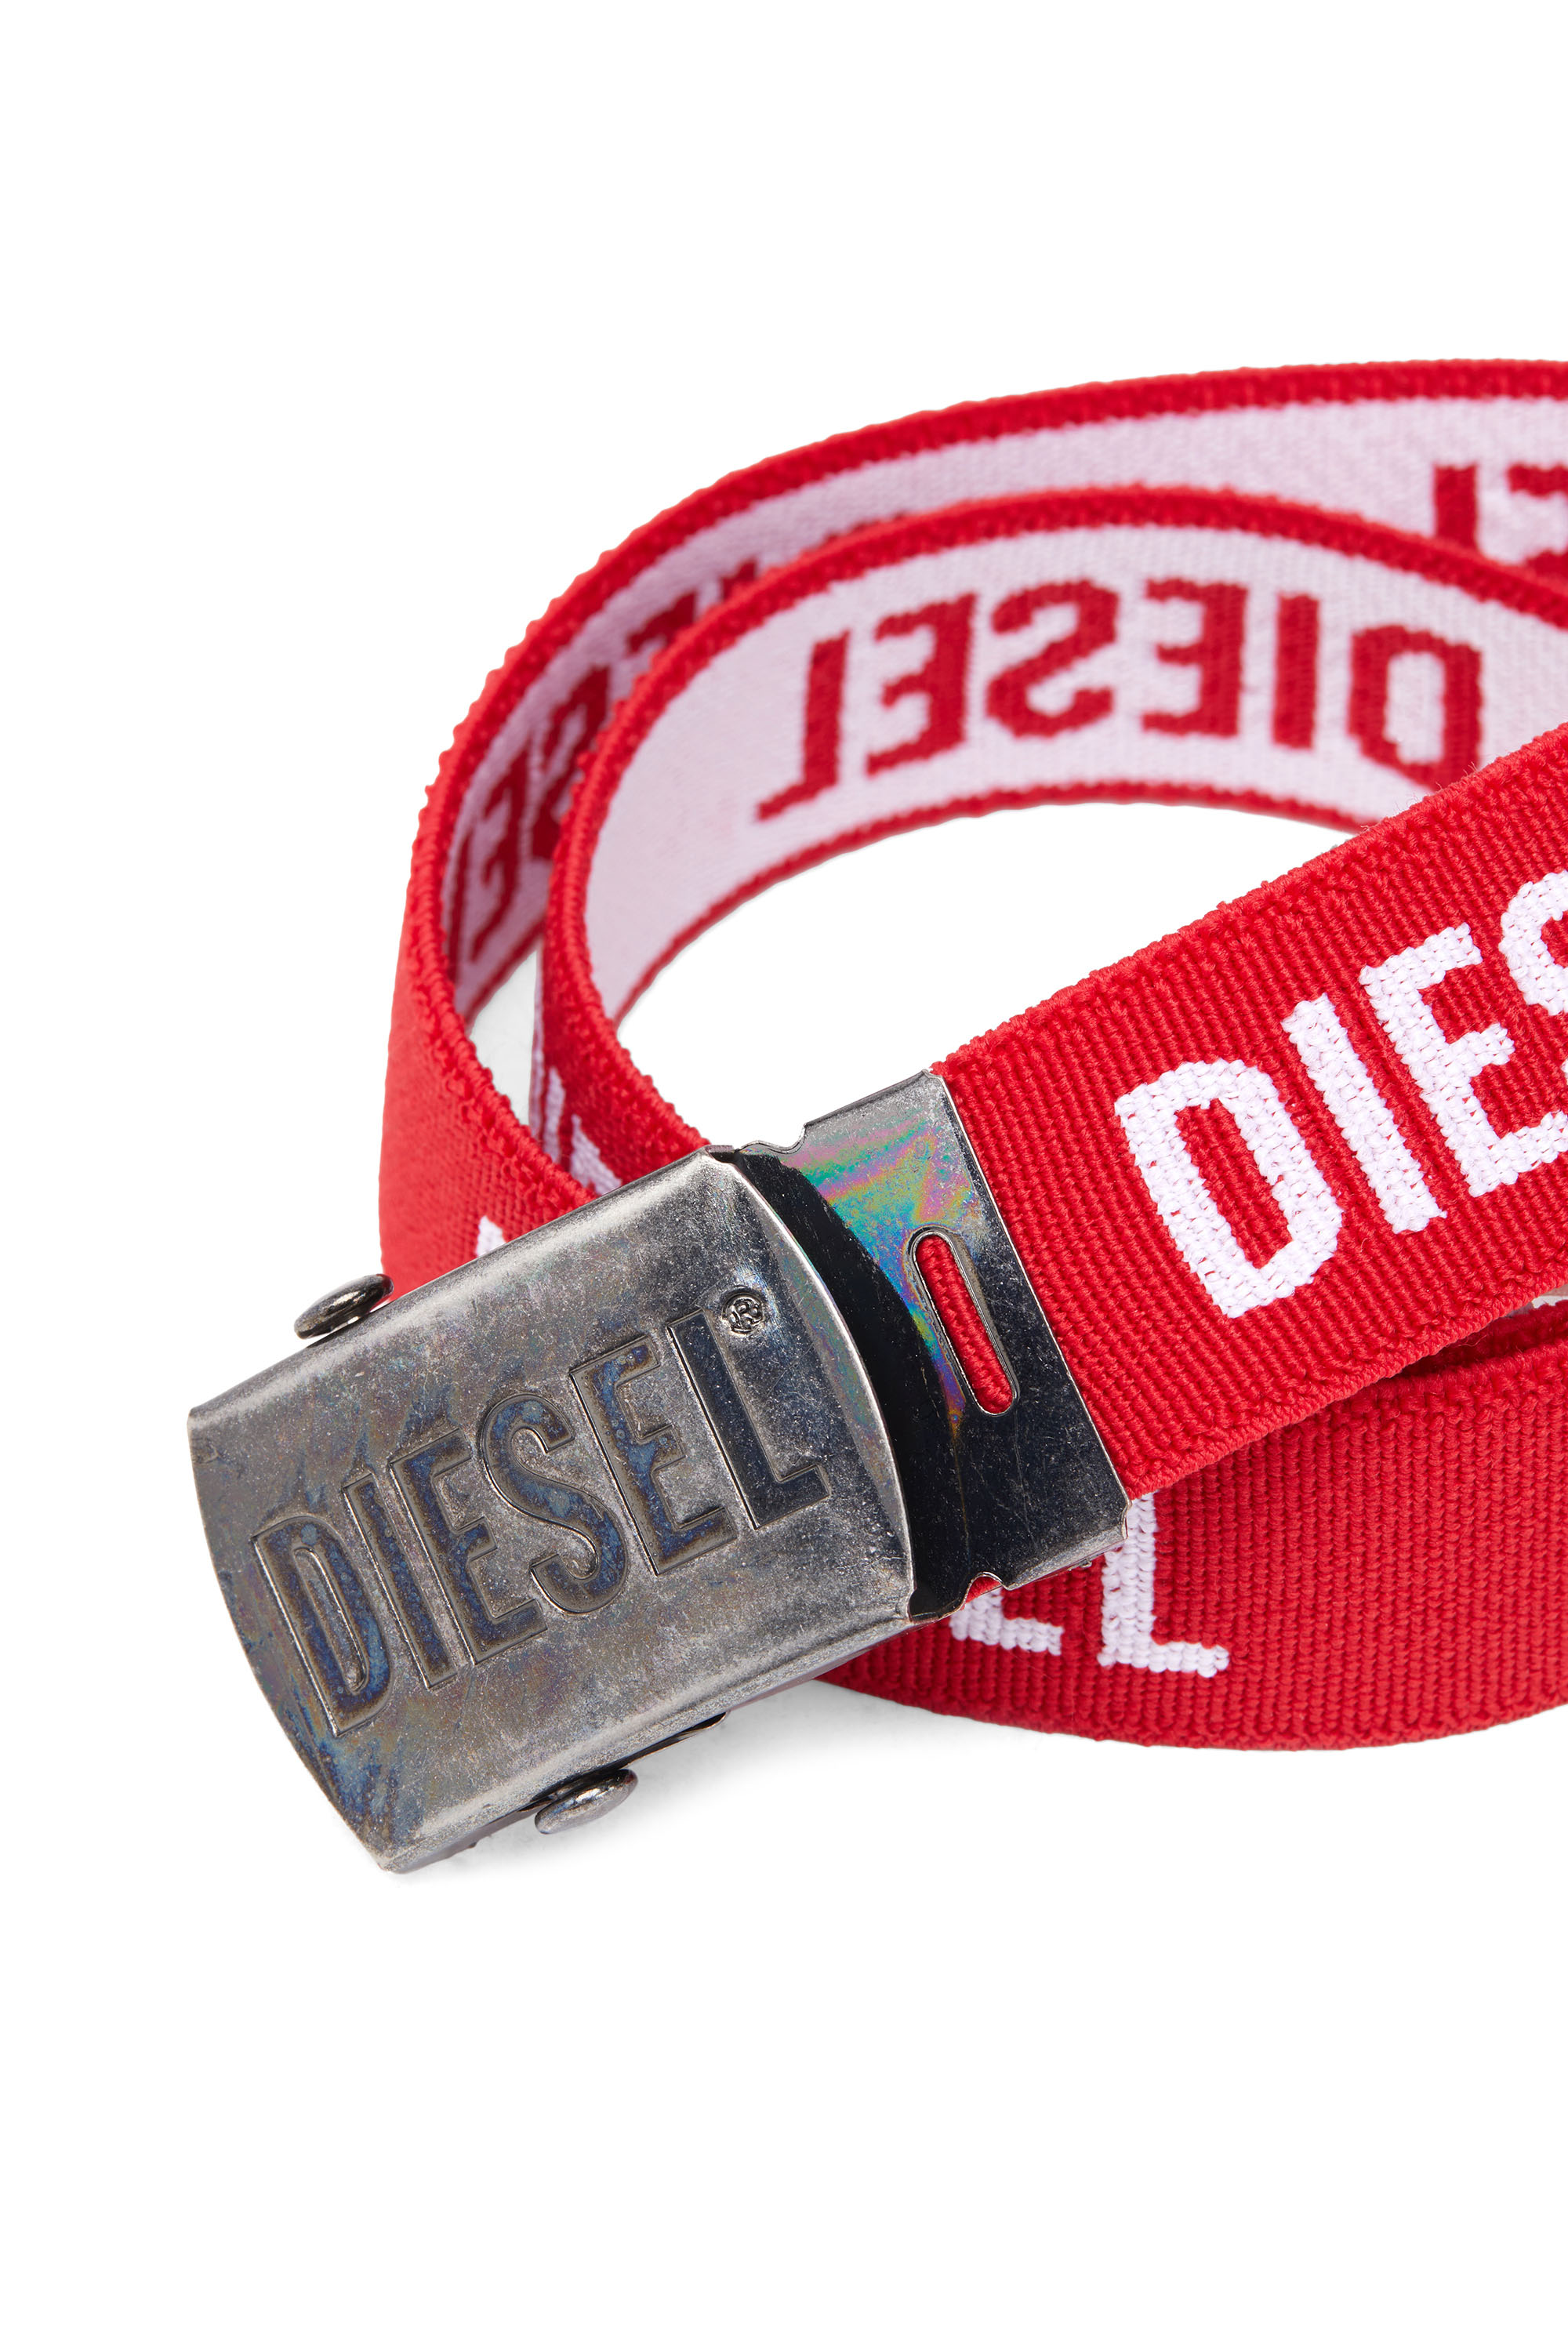 Diesel - BABILON, Red - Image 3